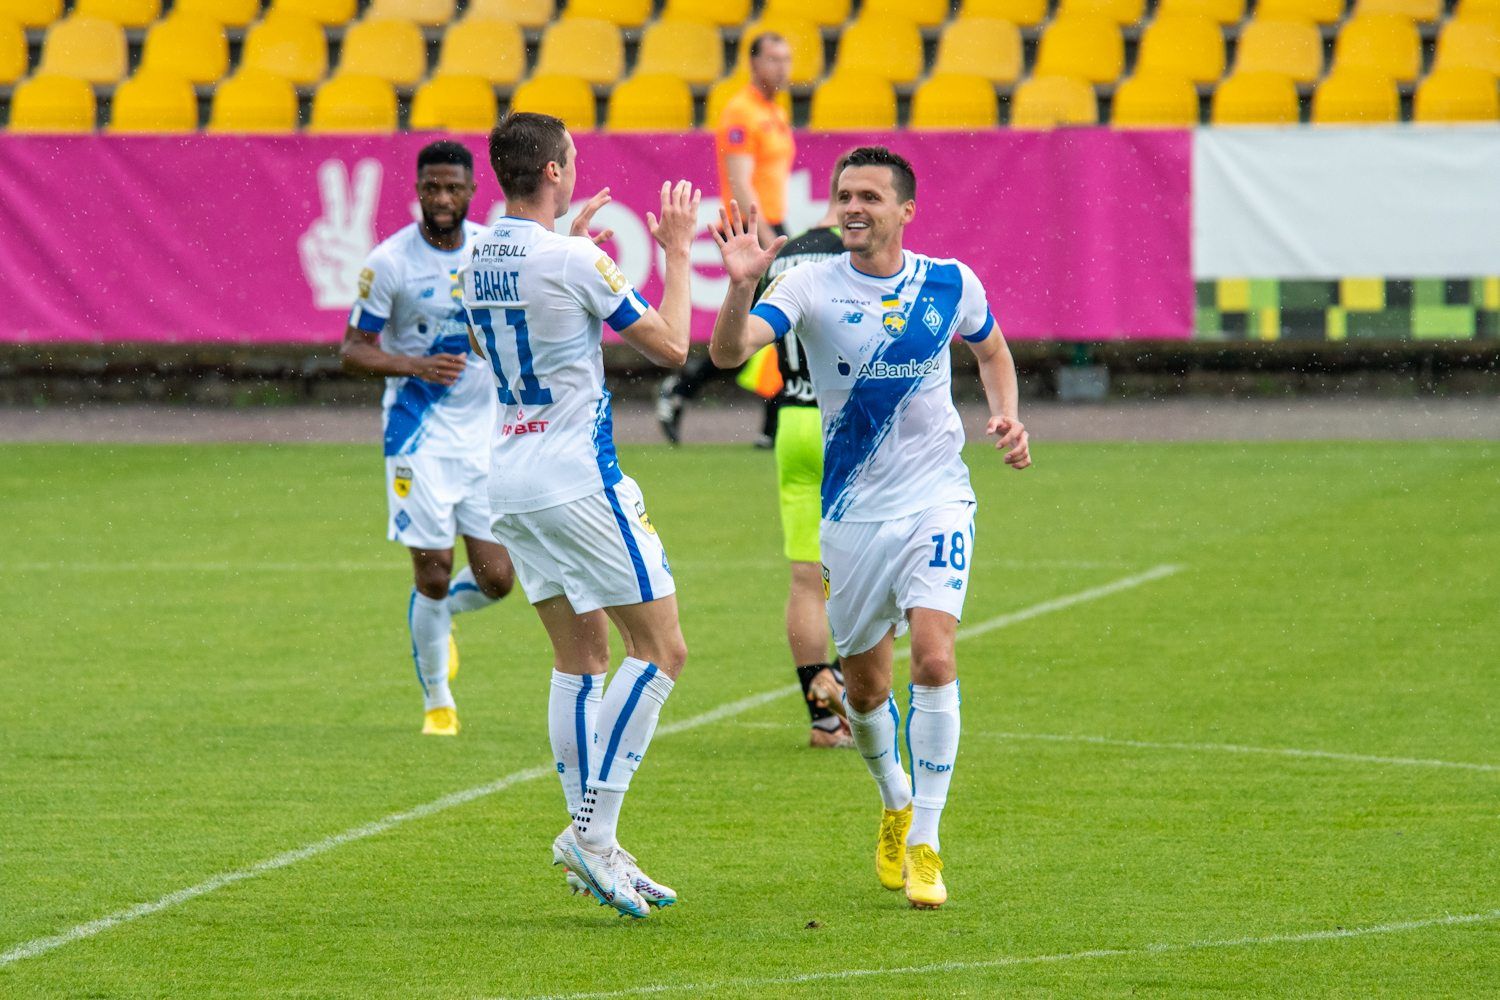 UPL. Oleksandria – Dynamo – 1:5. Report